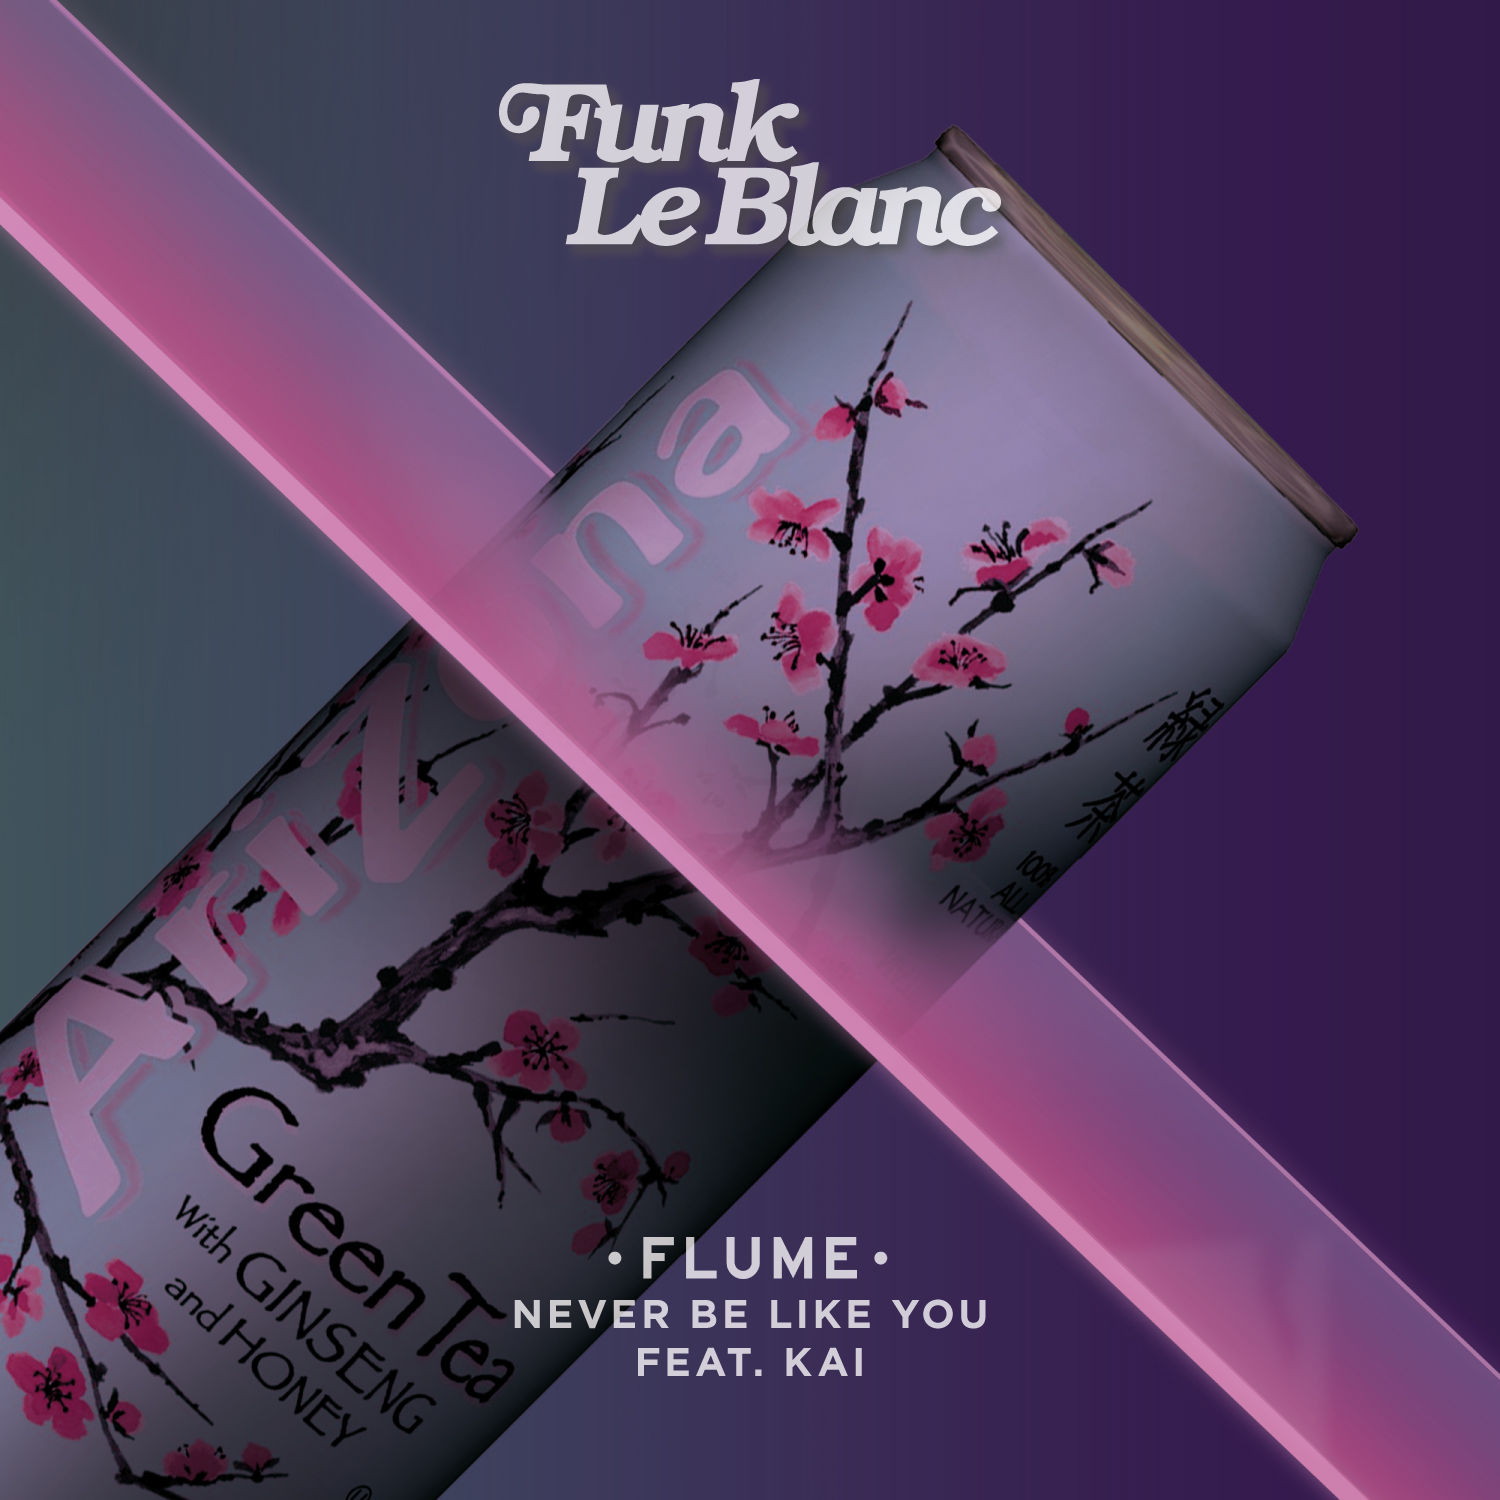 Flume - Never Be Like You (Feat. Kai) (Funk LeBlanc Remix) (신비, 평화, 활기, 경쾌, 따뜻, 리믹스)